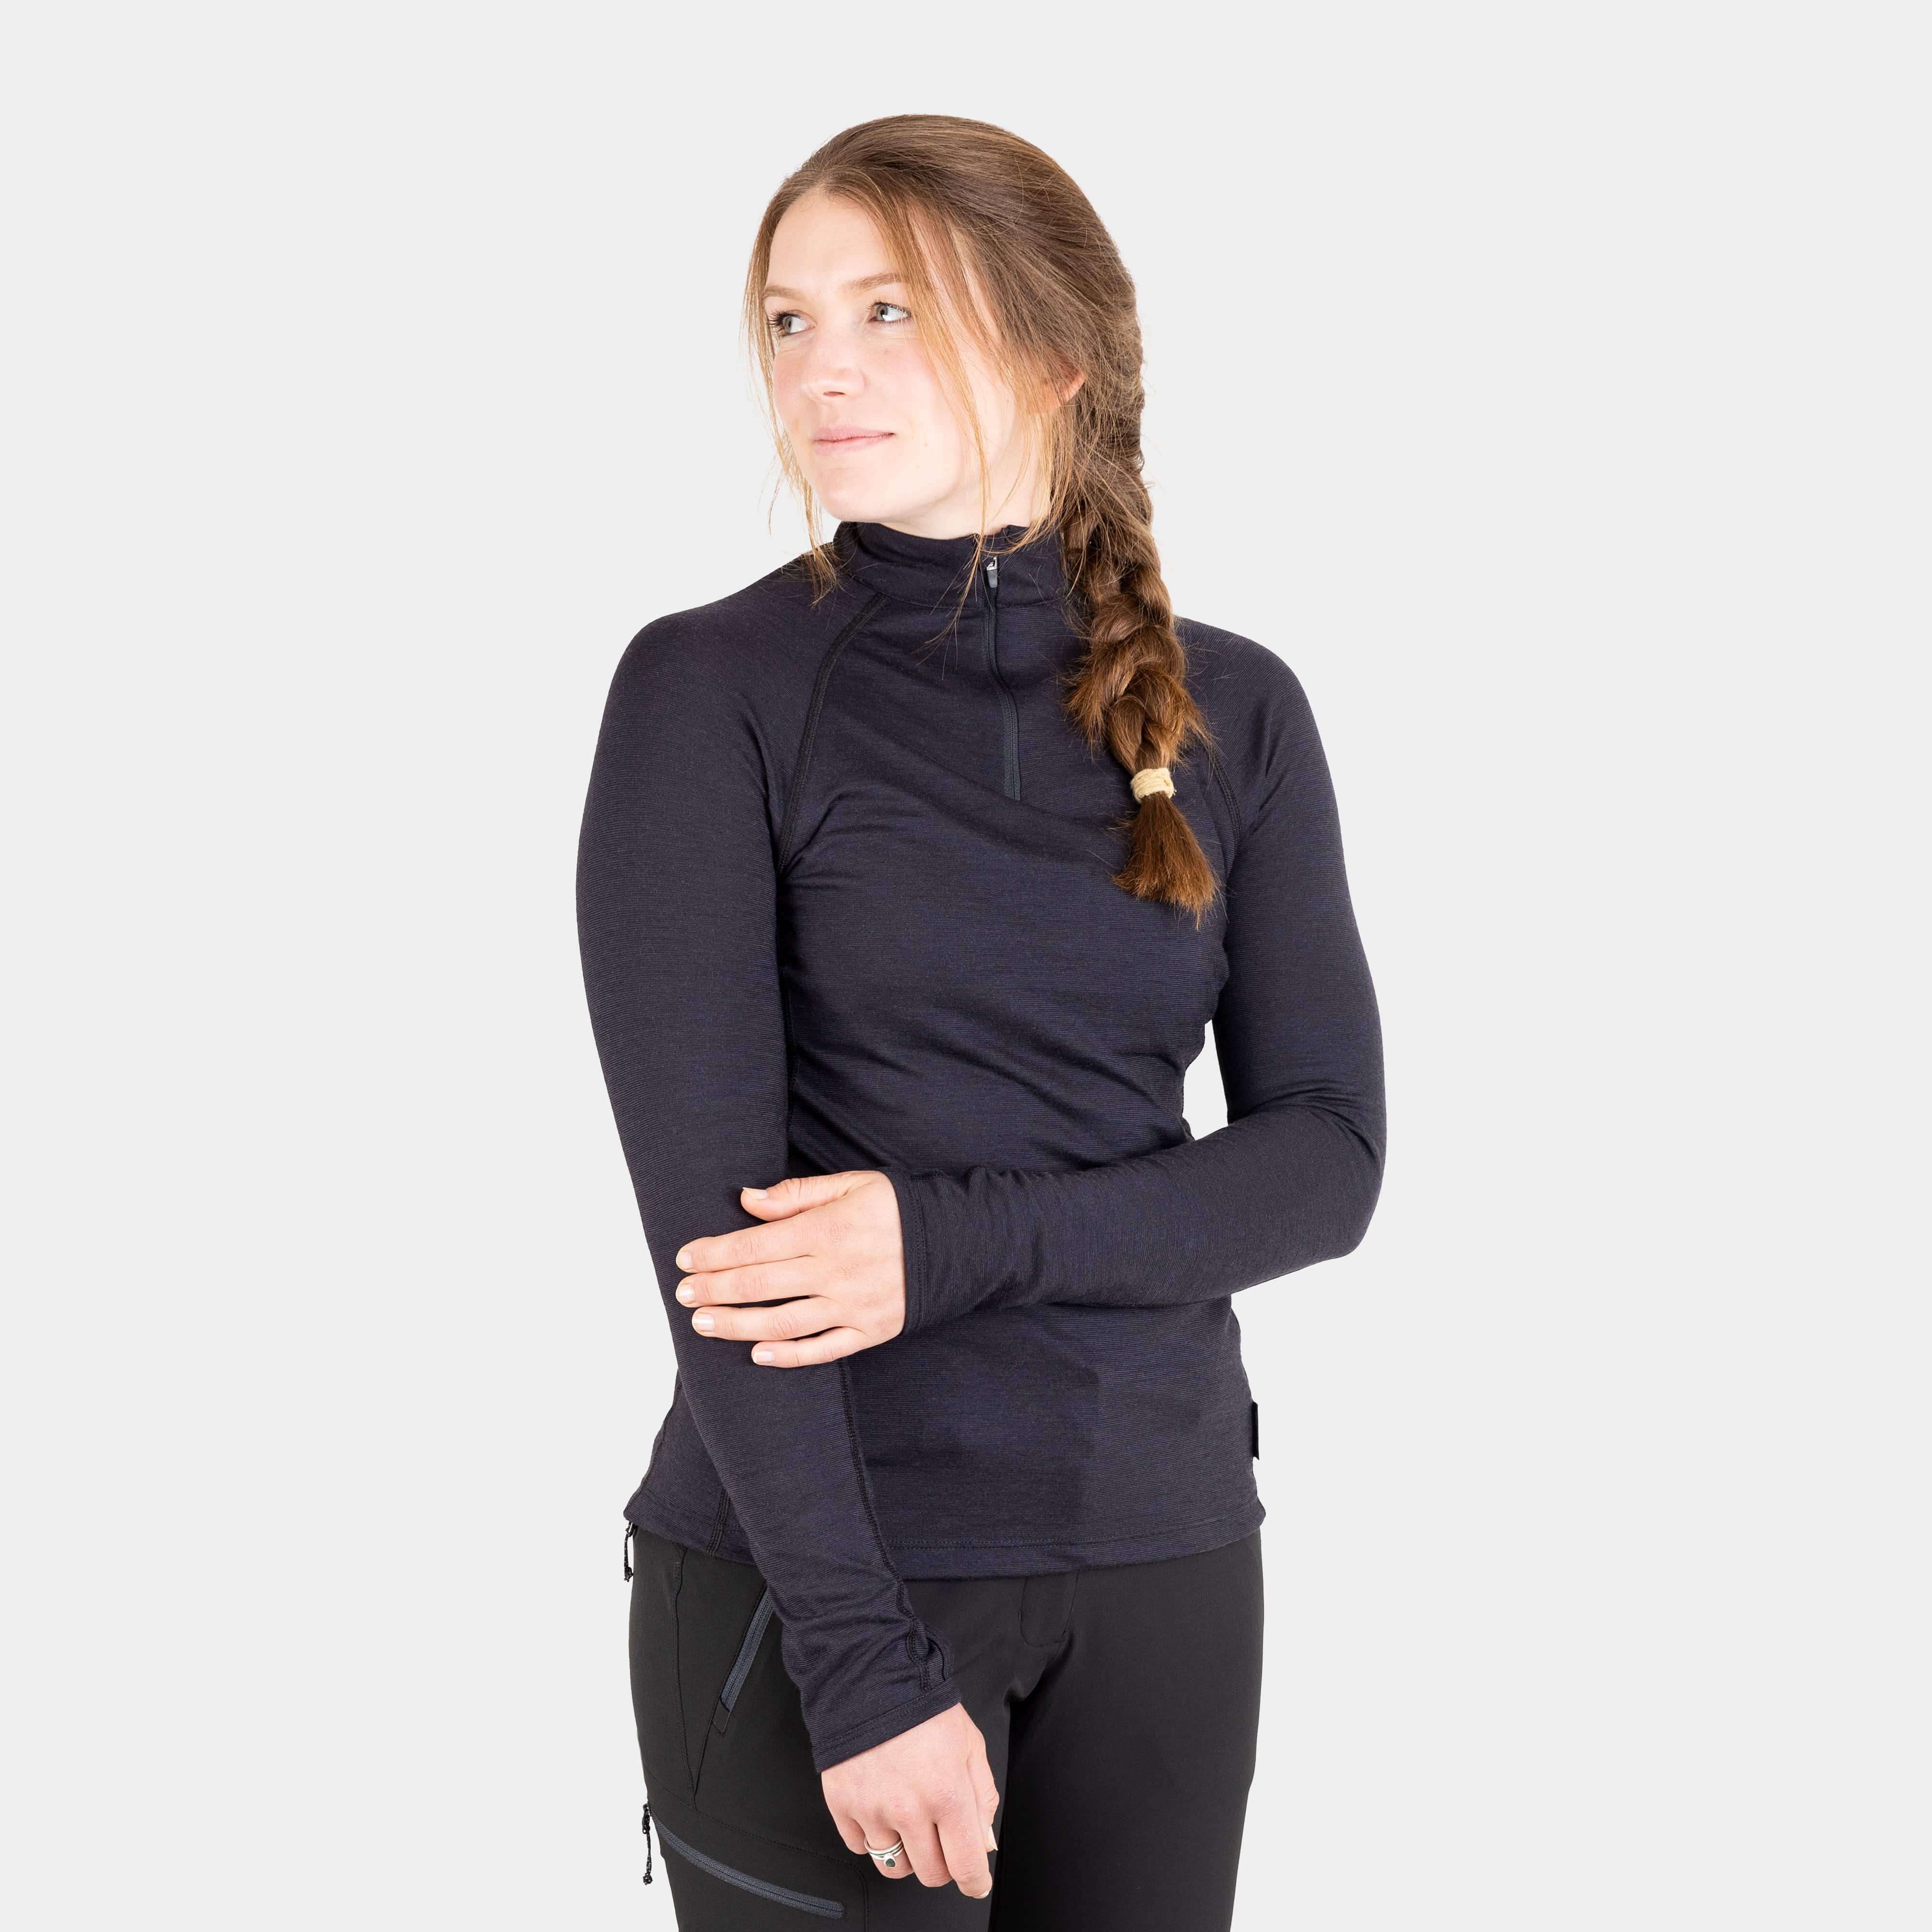 alpkit womens Kepler zip top in graphite black